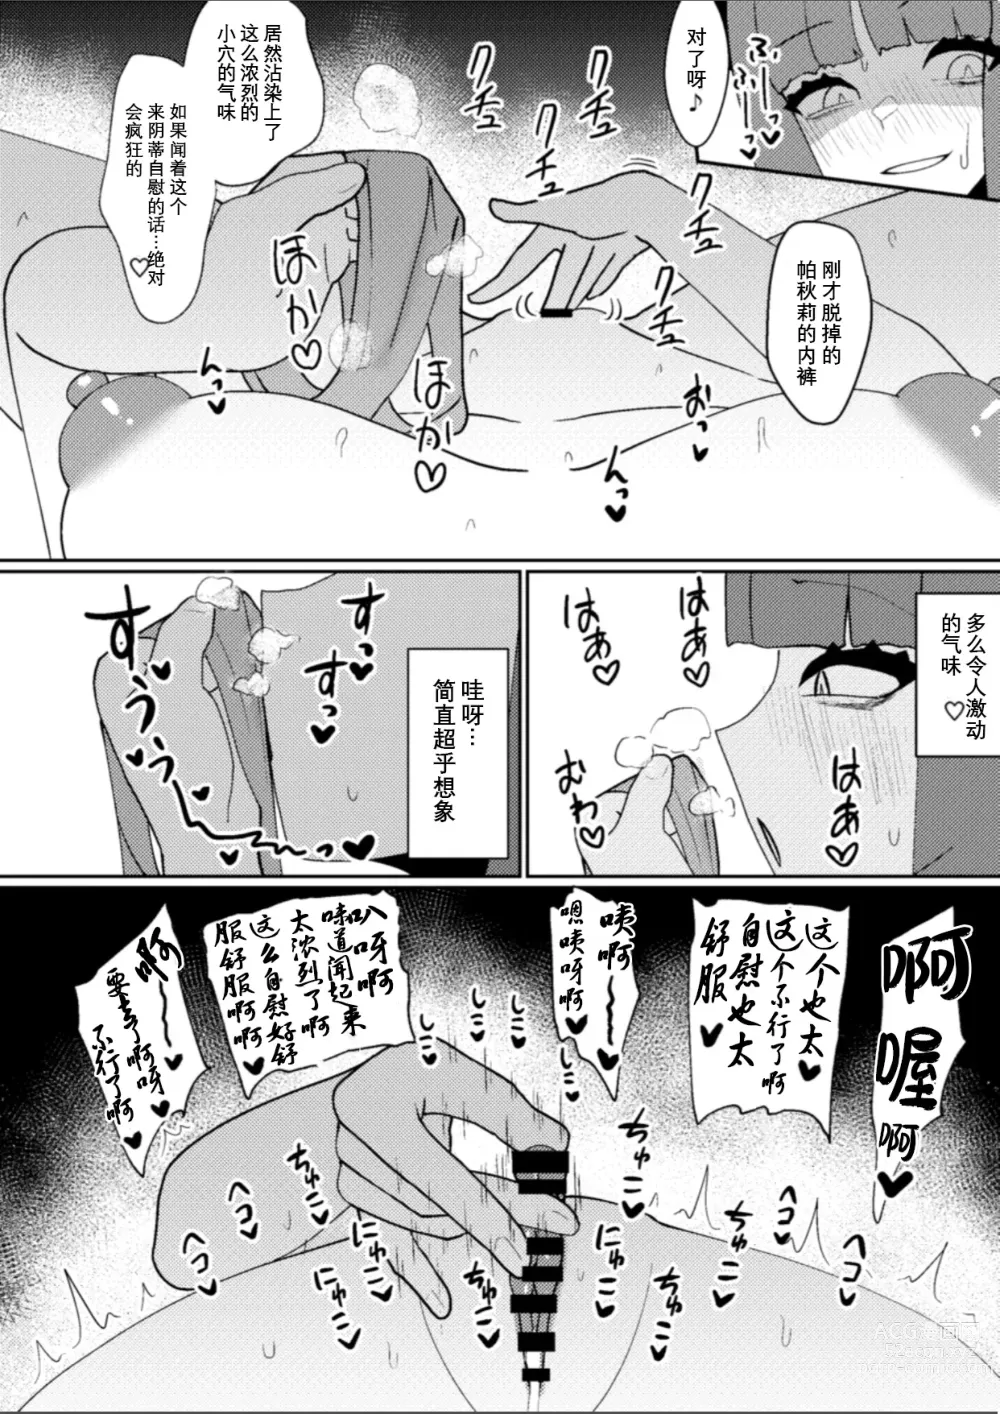 Page 10 of doujinshi 宫出口瑞灵的凭依自慰记录